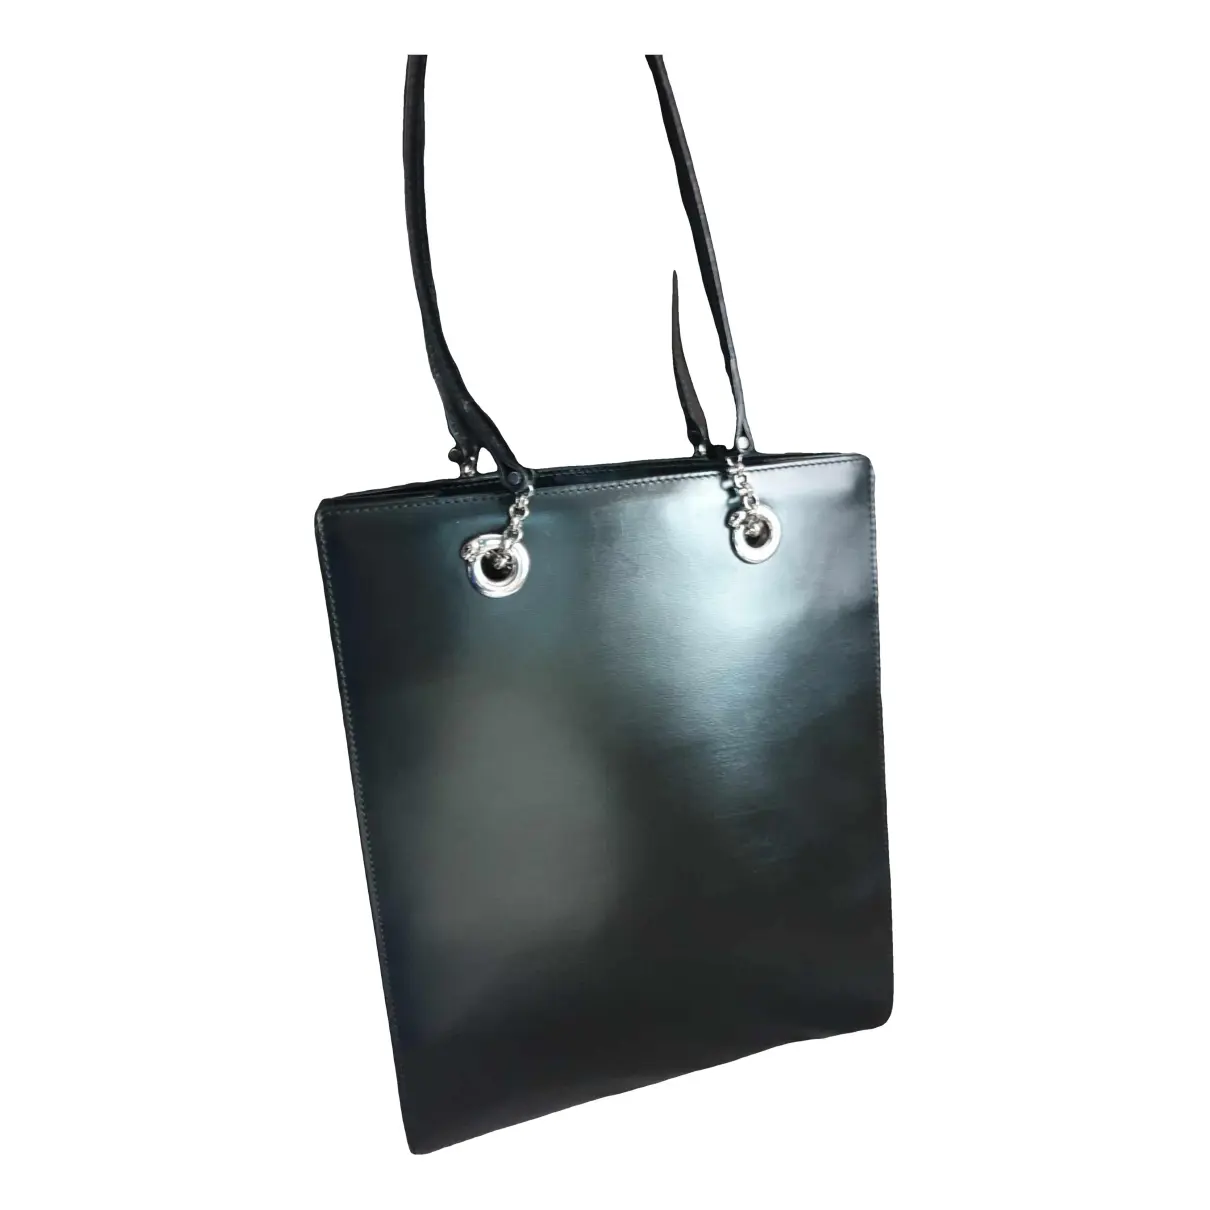 Panthère leather handbag